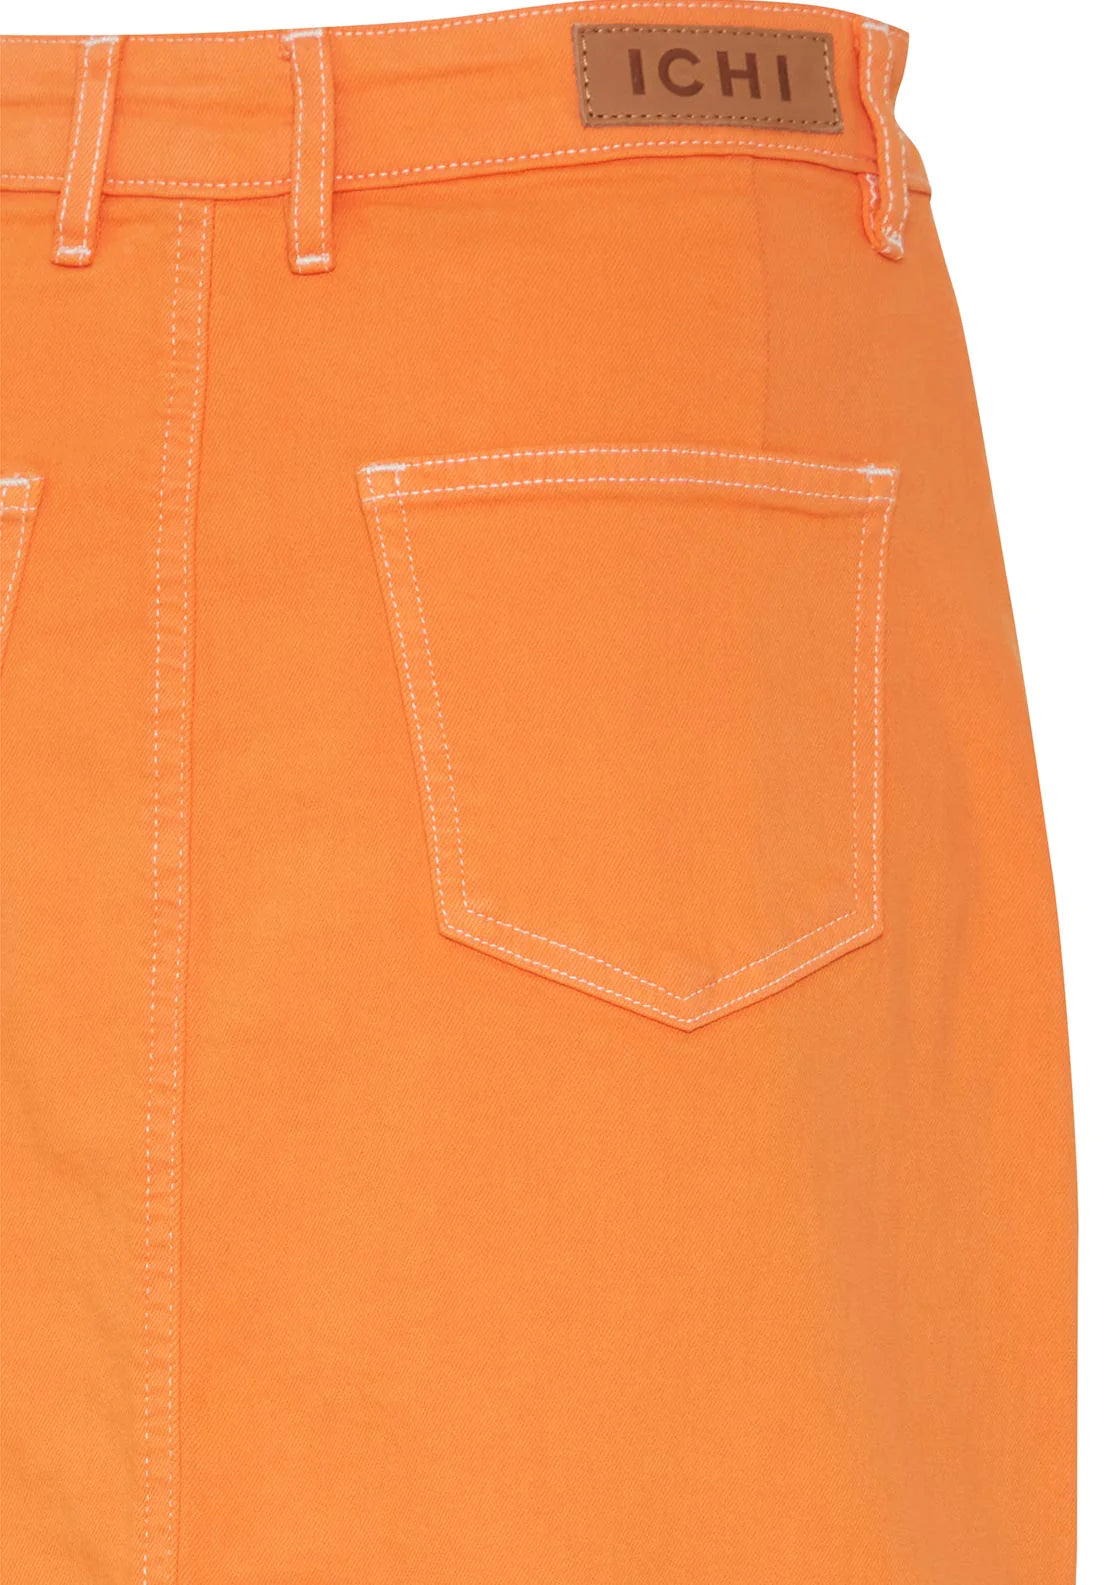 Ichi Ihcenny Denim Midi Skirt in Persimmon Orange